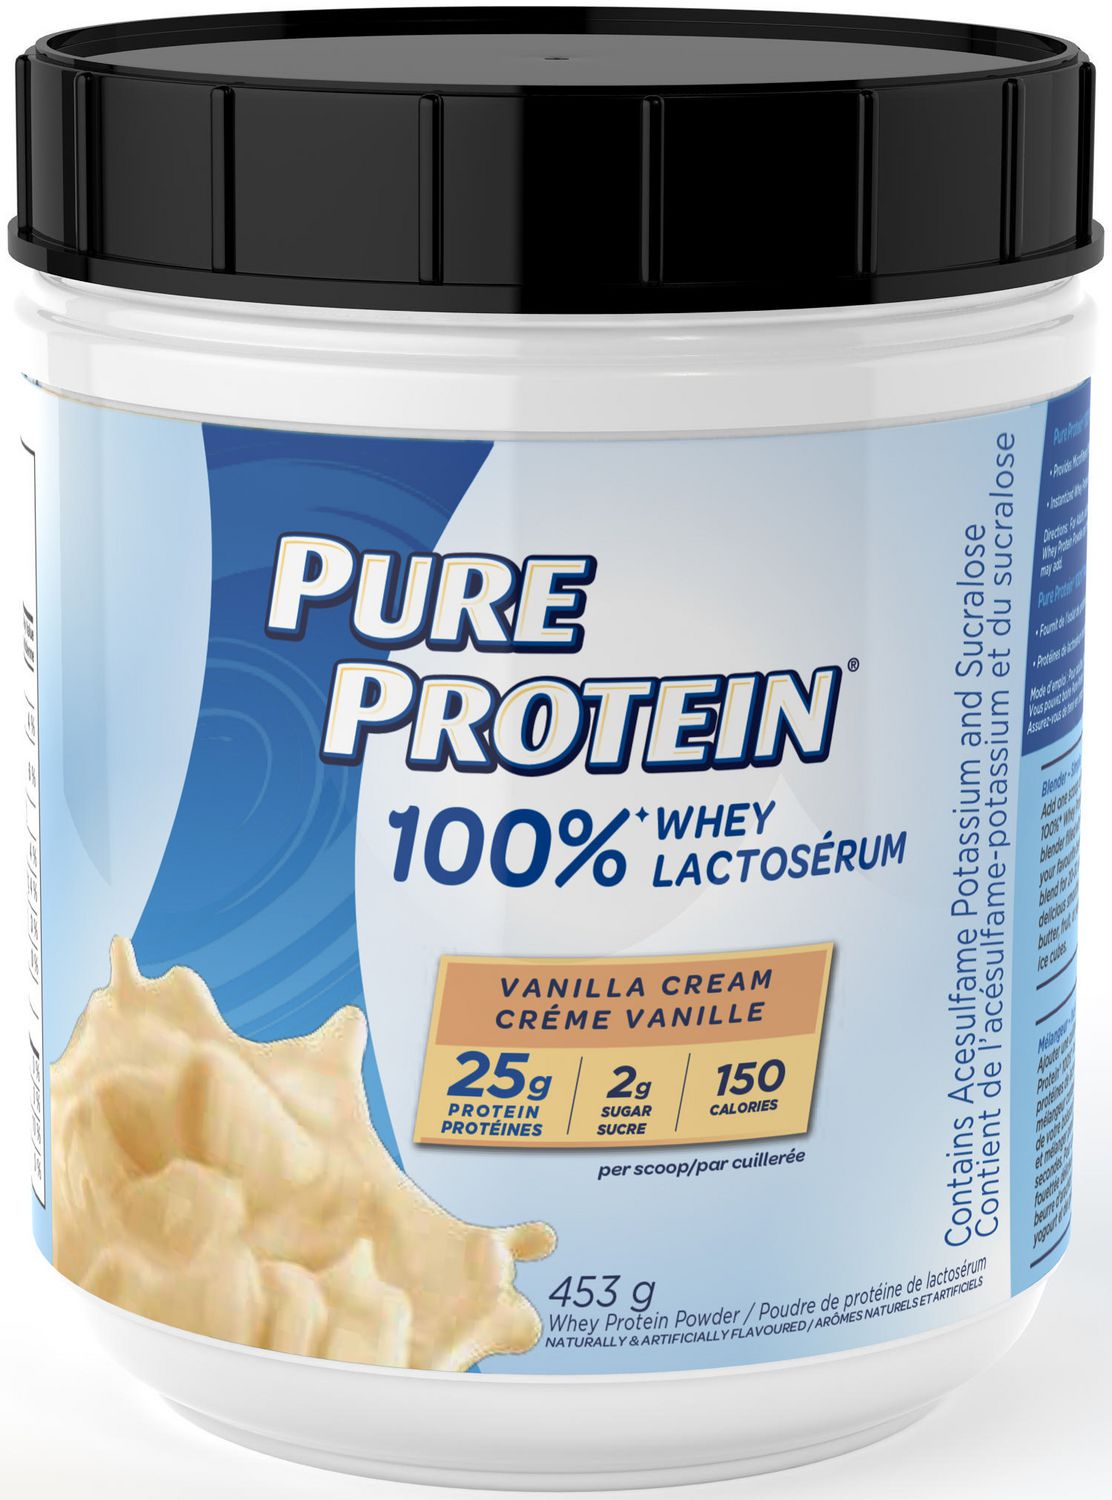 Pure Protein Whey Powder Vanilla Cream 453g Walmart Canada